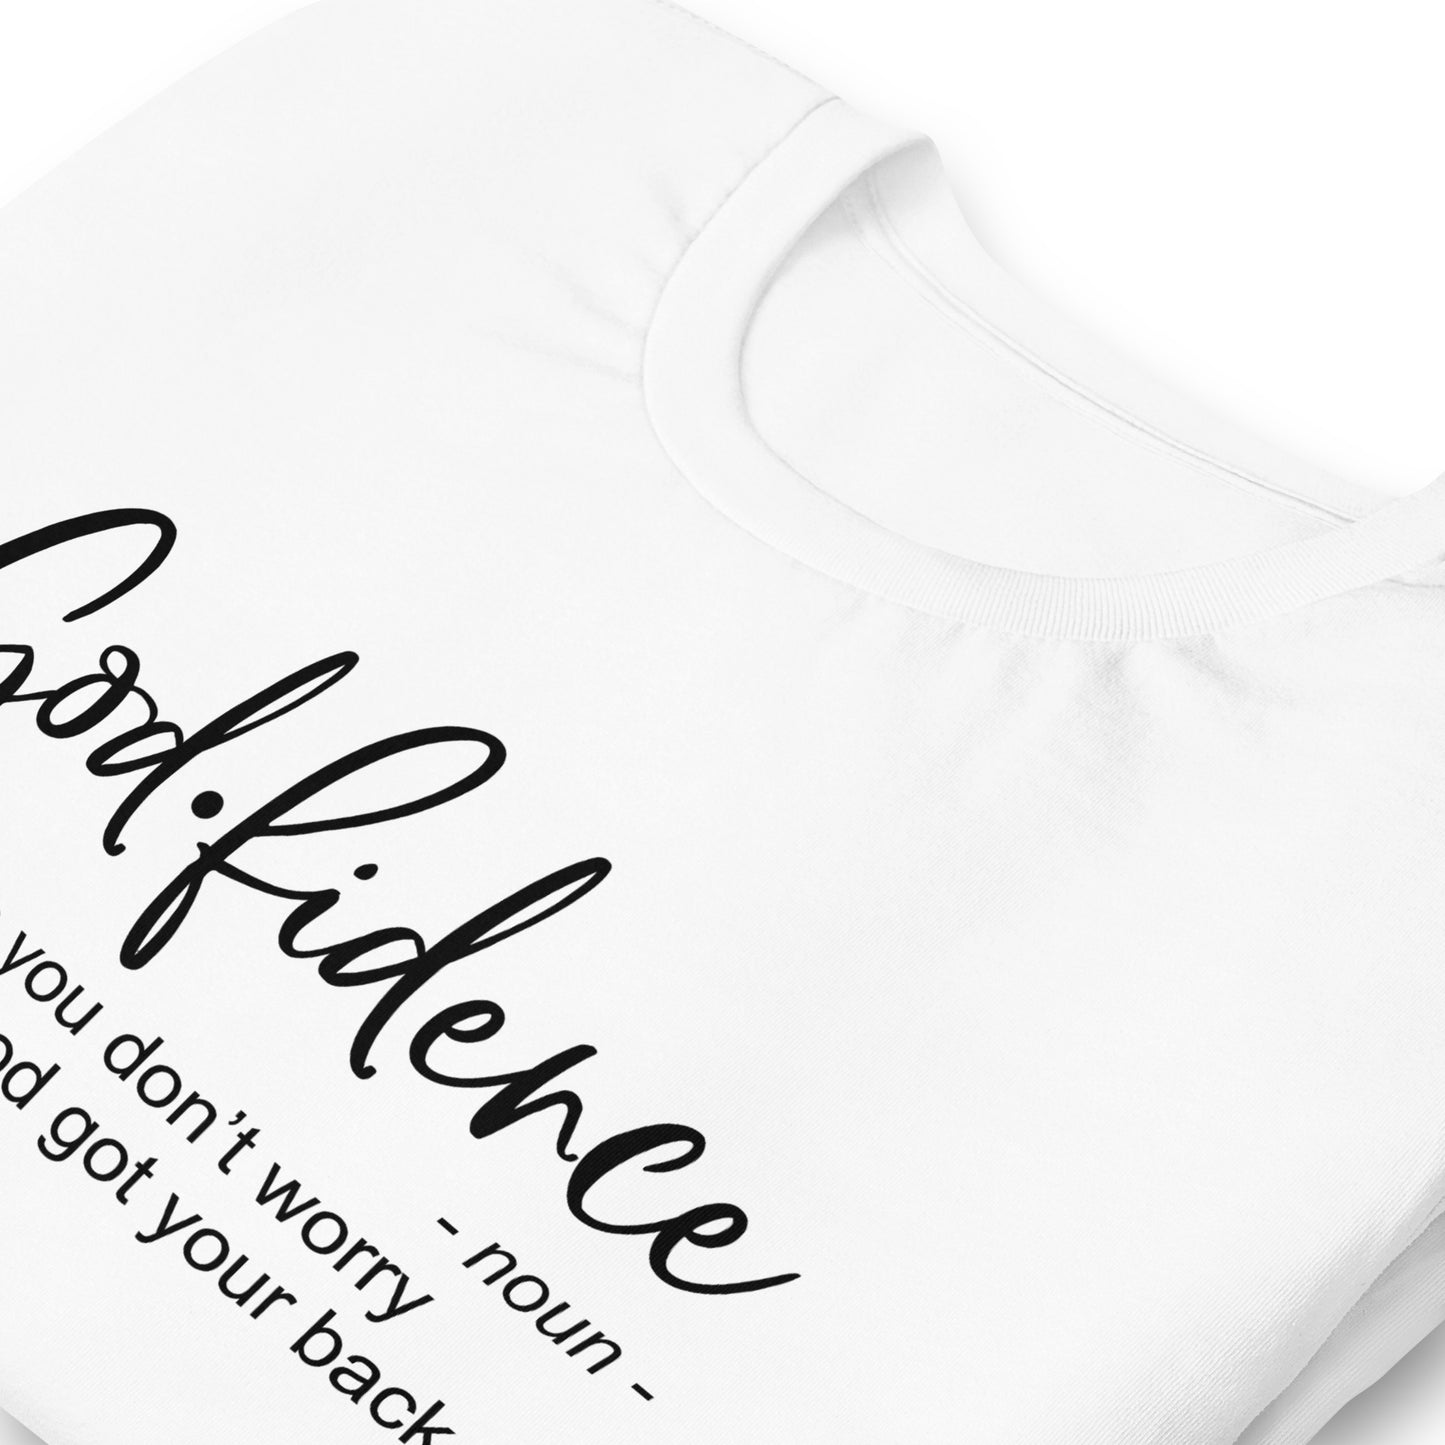 God-fidence Short Sleeve T-shirt